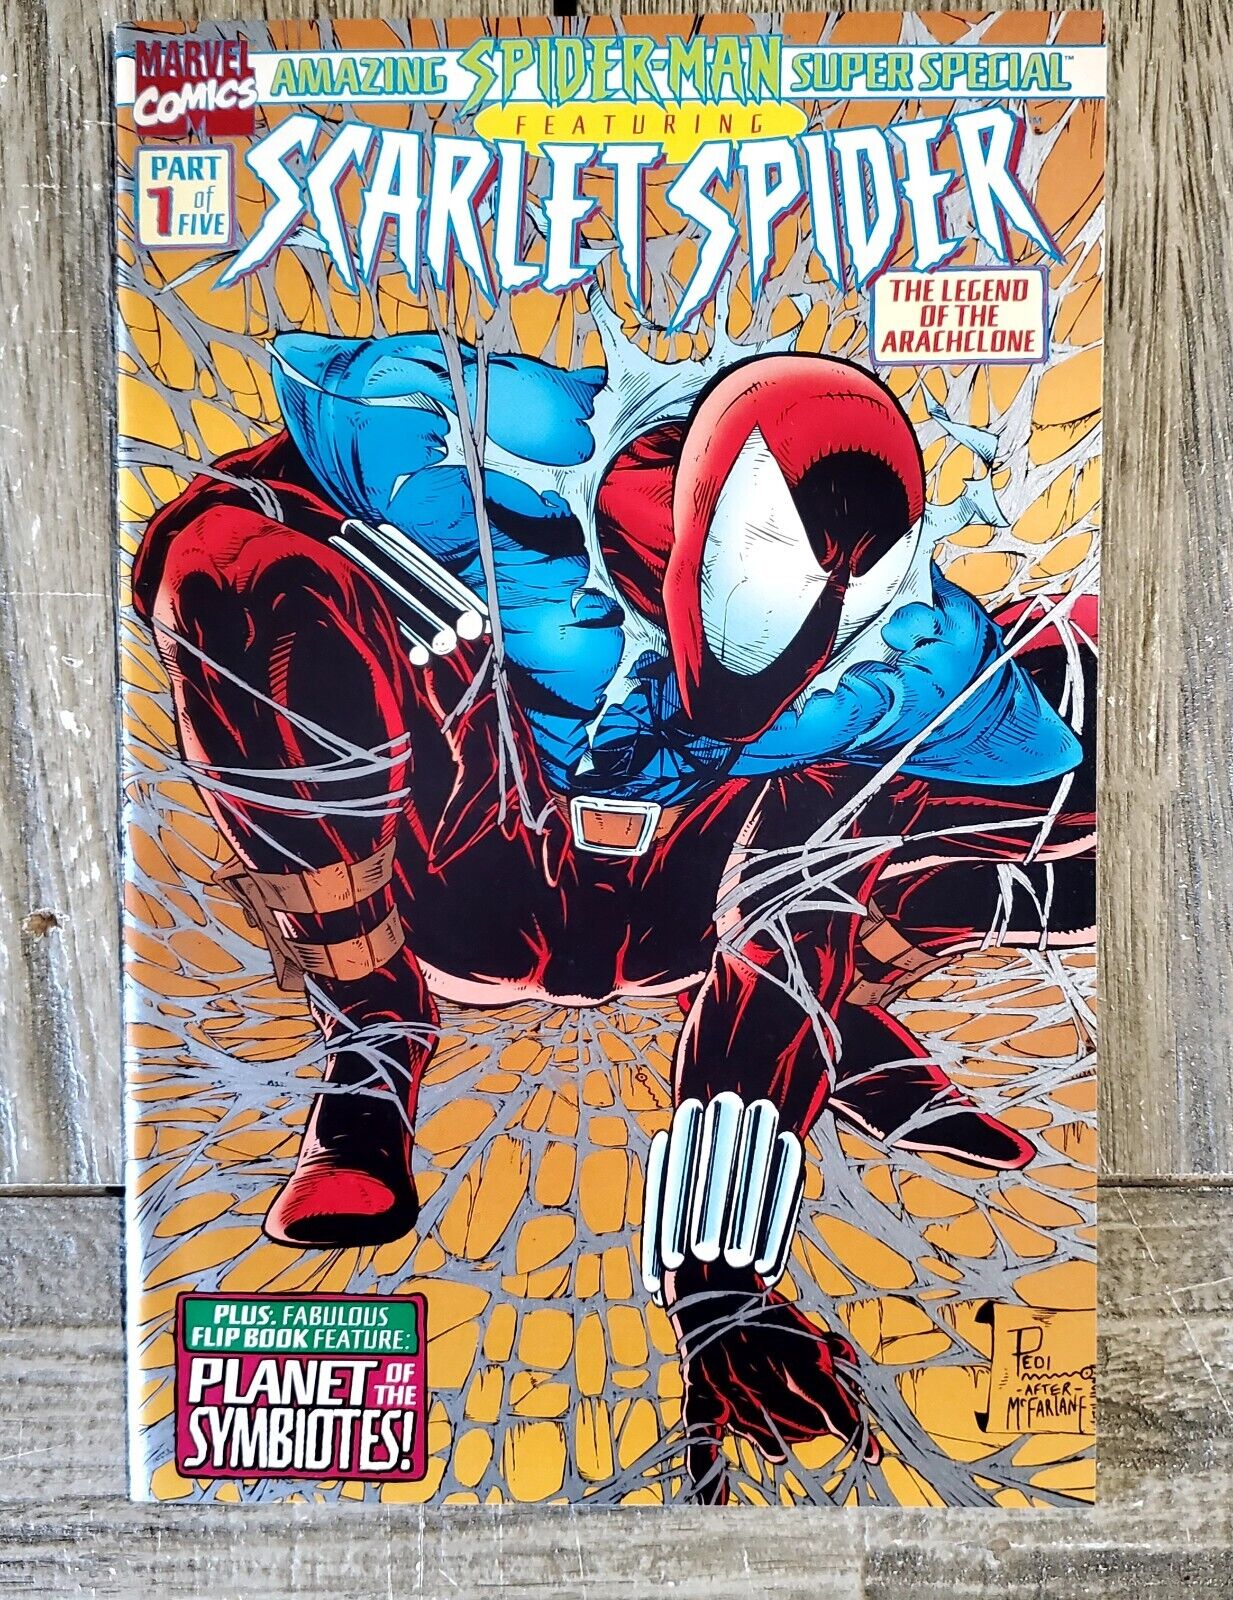 Amazing Spiderman Scarlet Spider #1 Marvel Comic Book